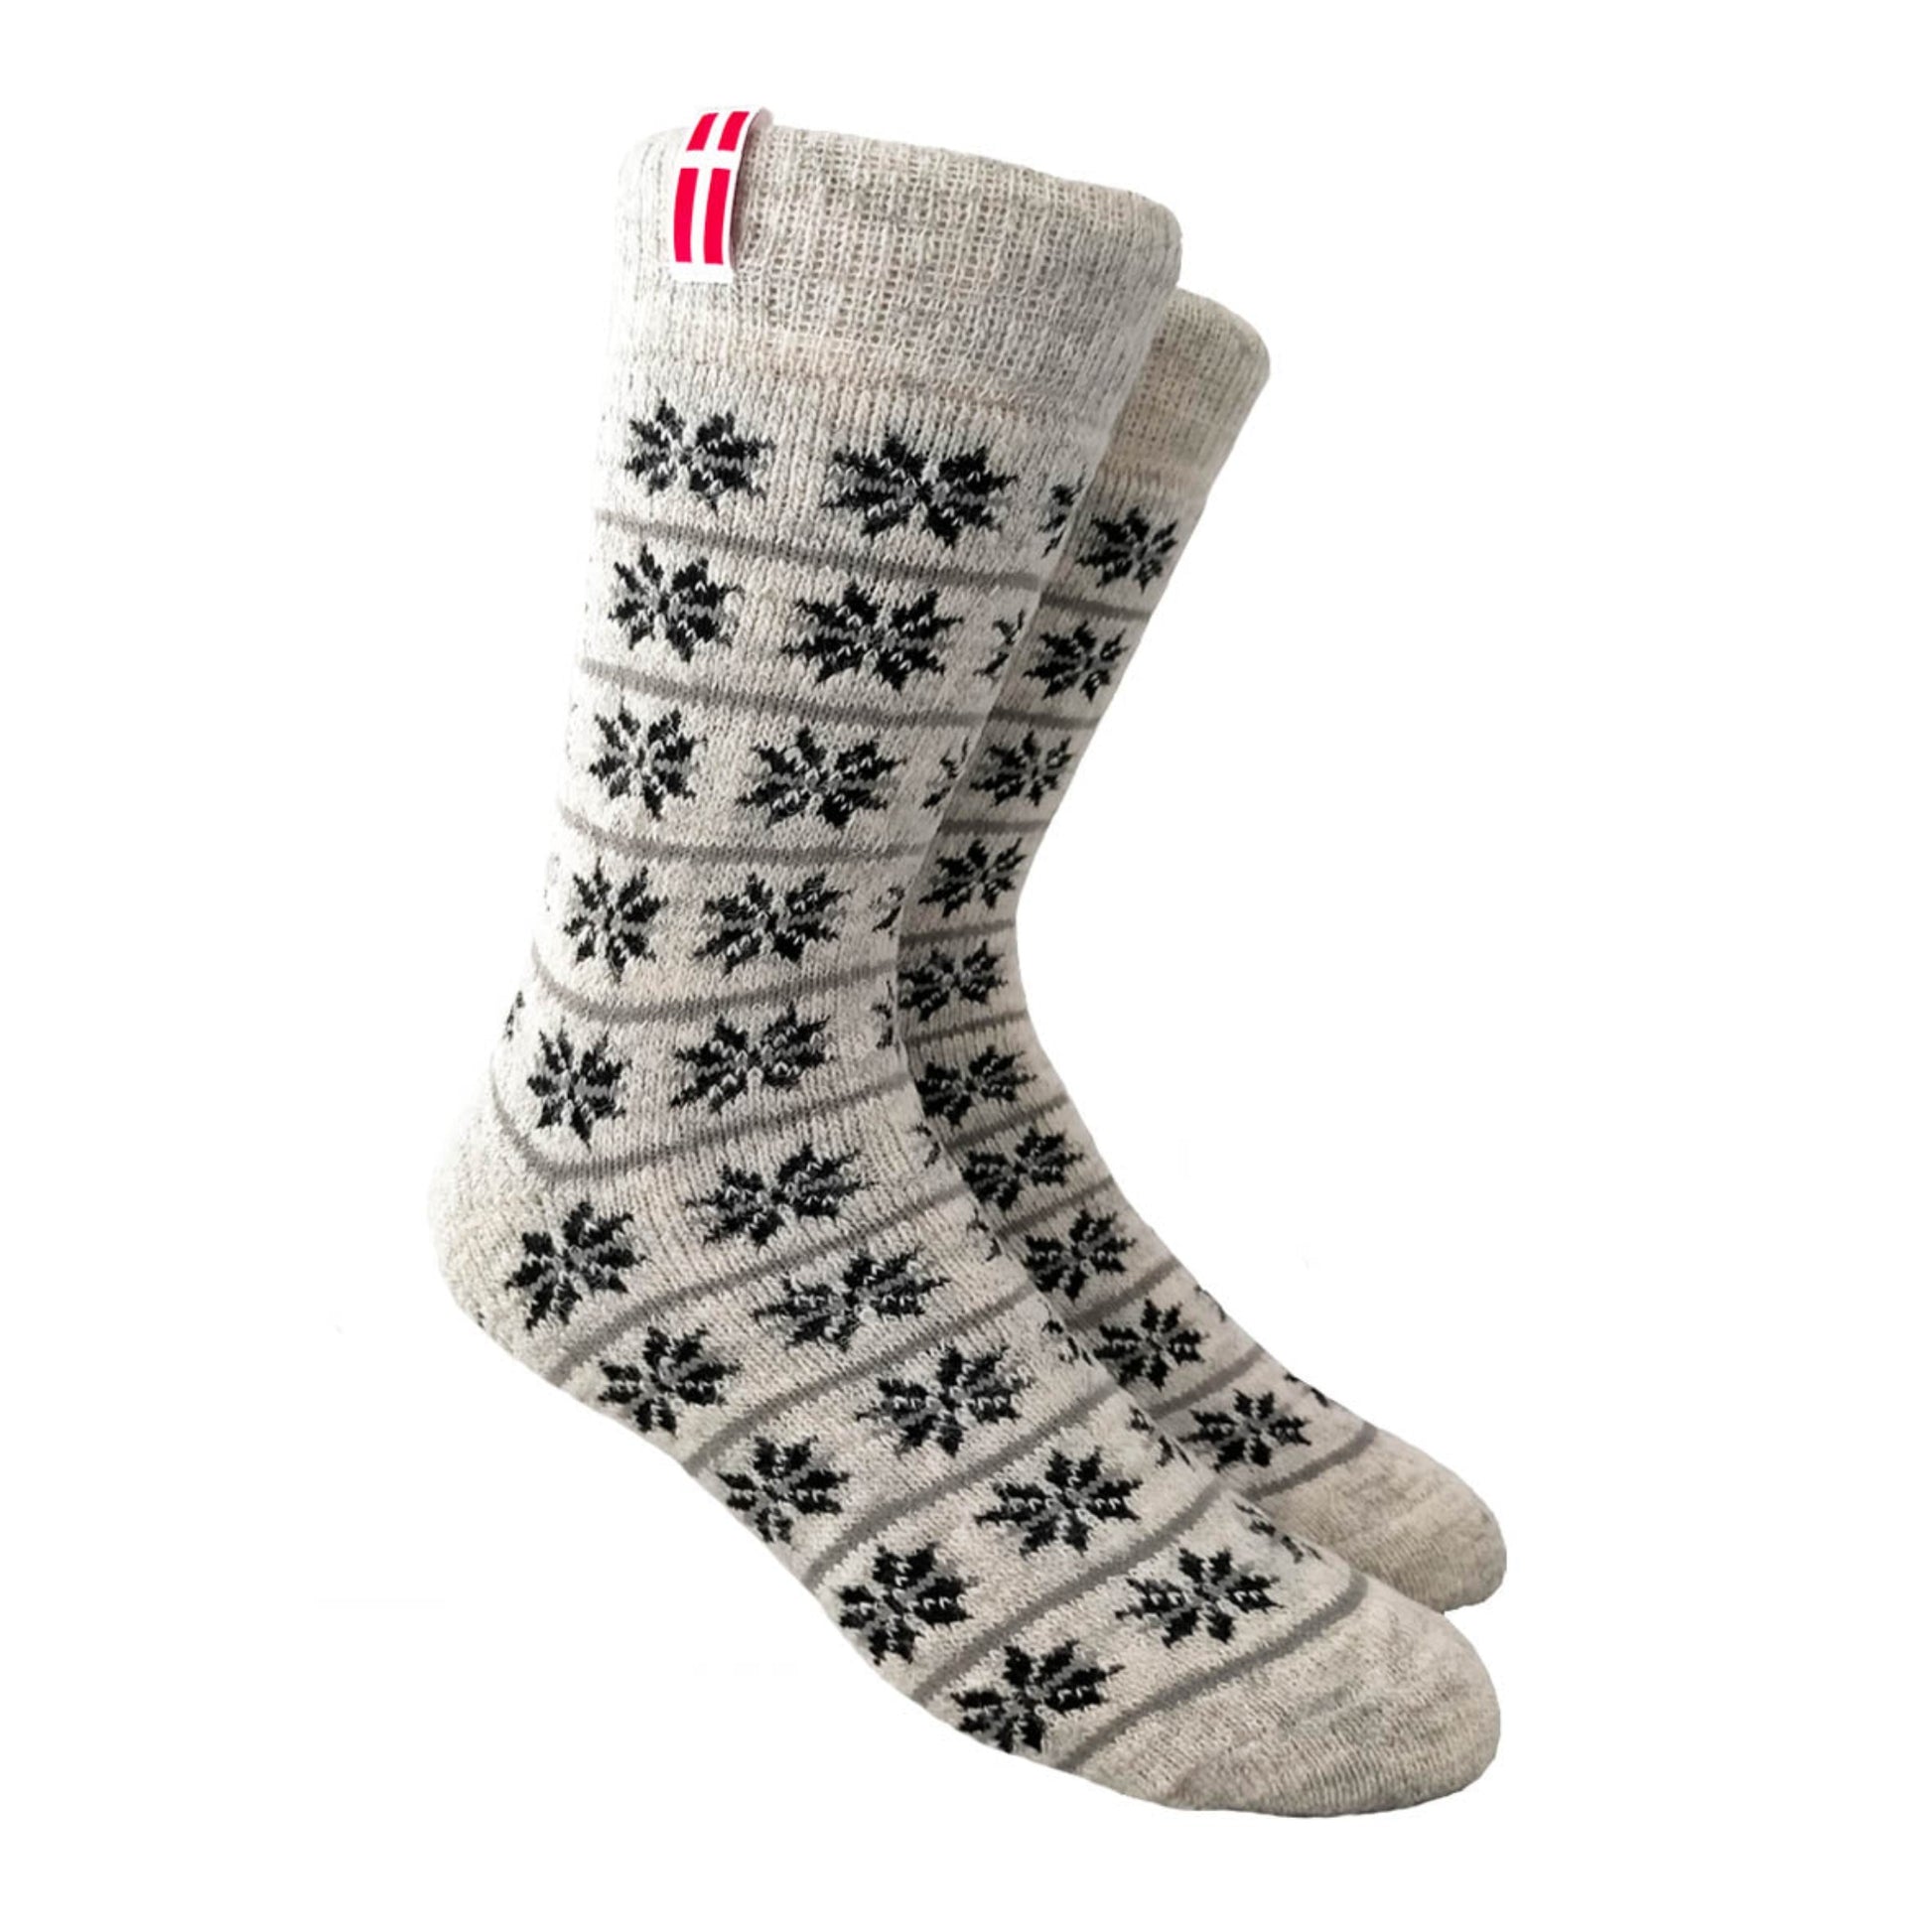 NORWOOL Wool Socks Denmark, Natural/Black (6583972528193)